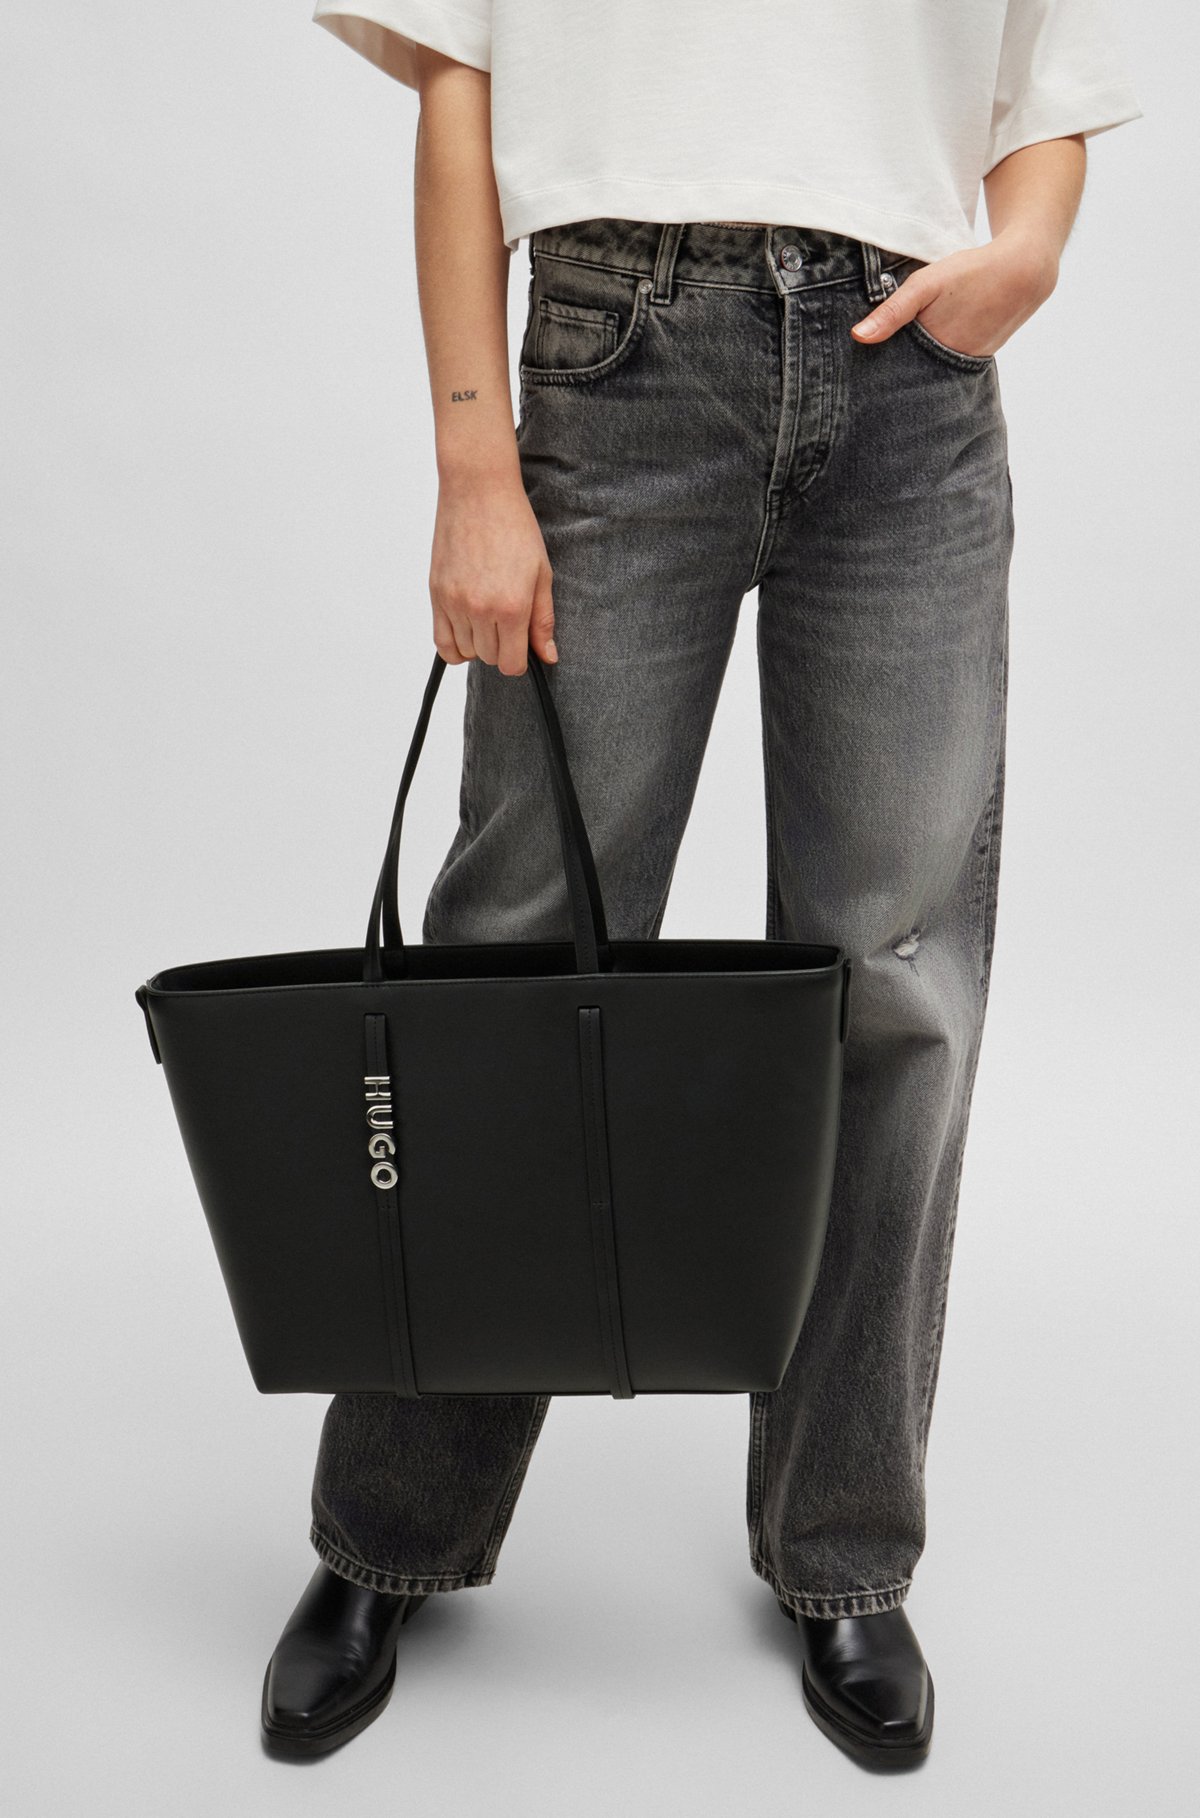 HUGO - Shopper bag in faux leather with polished logo lettering